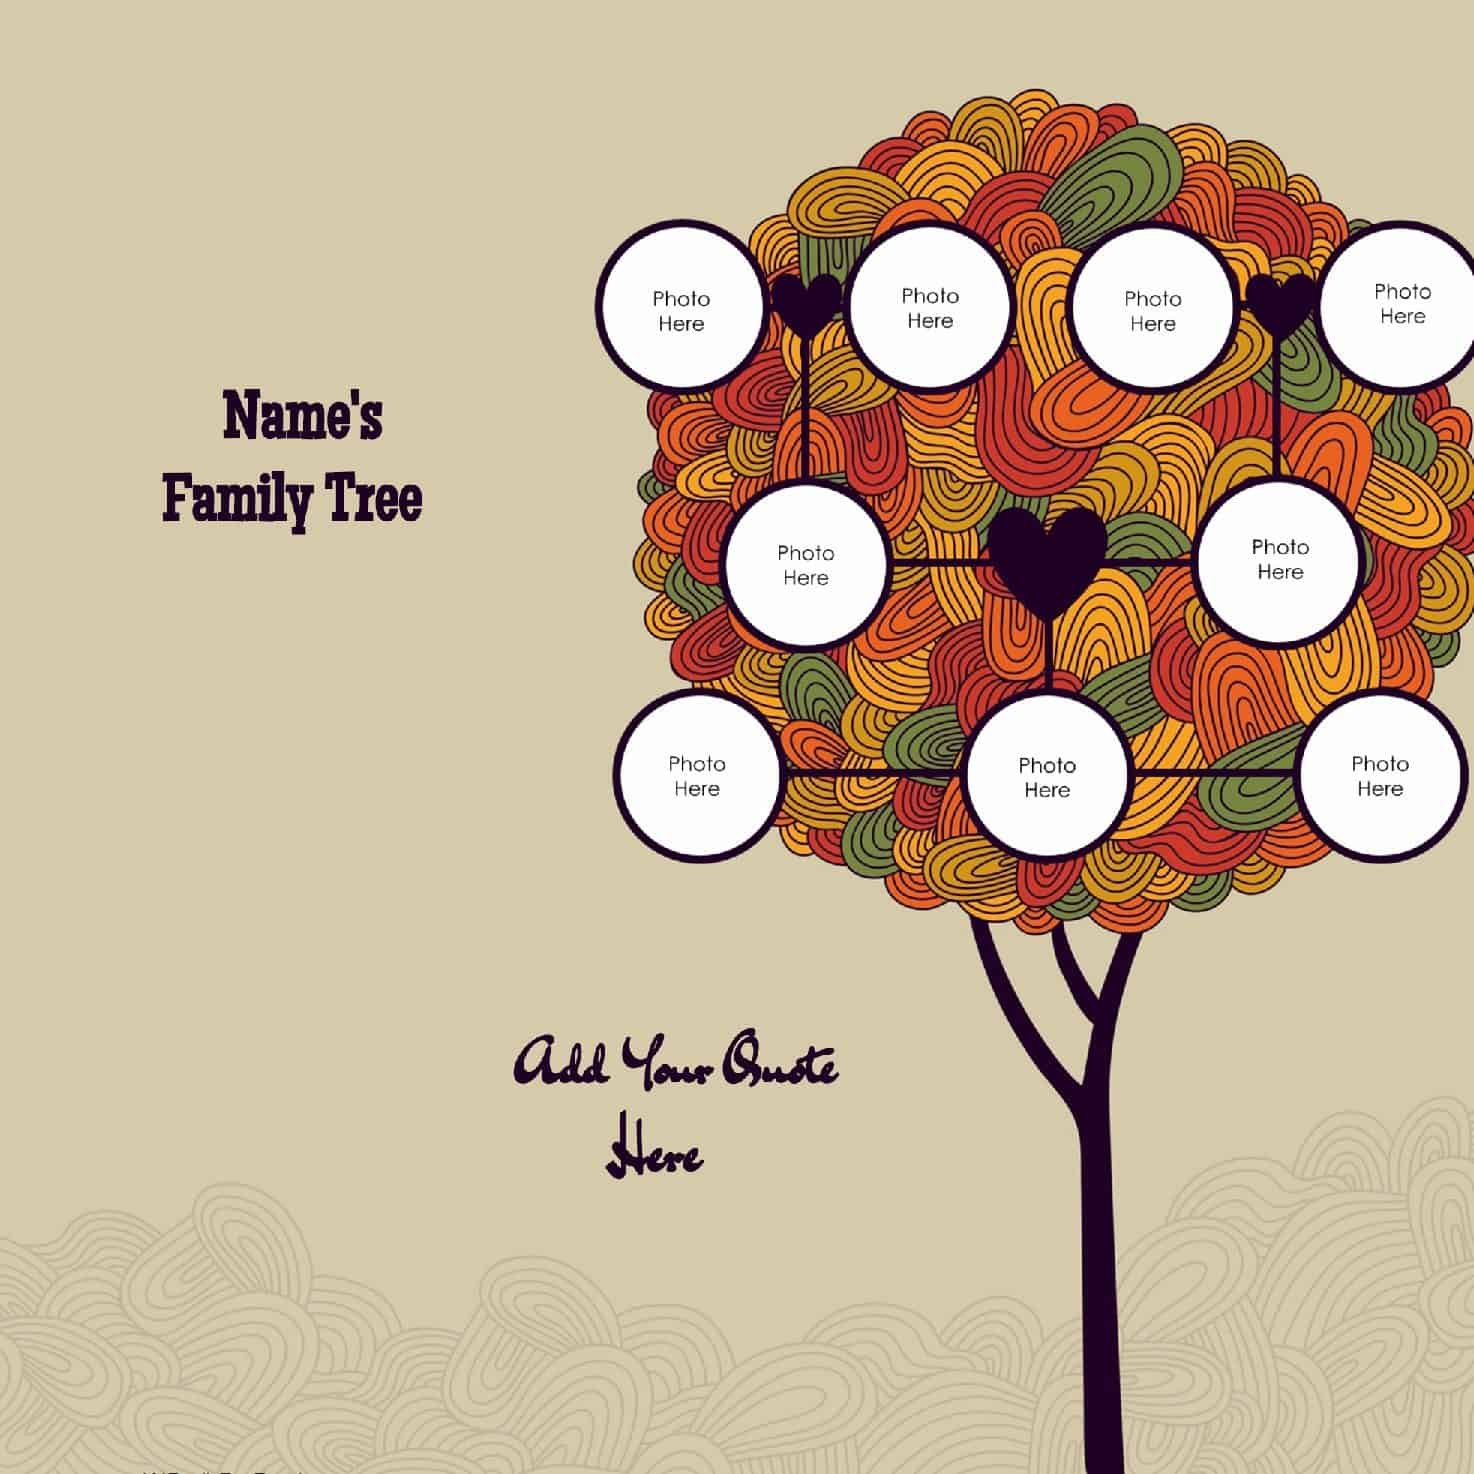 3 Generation Family Tree Template